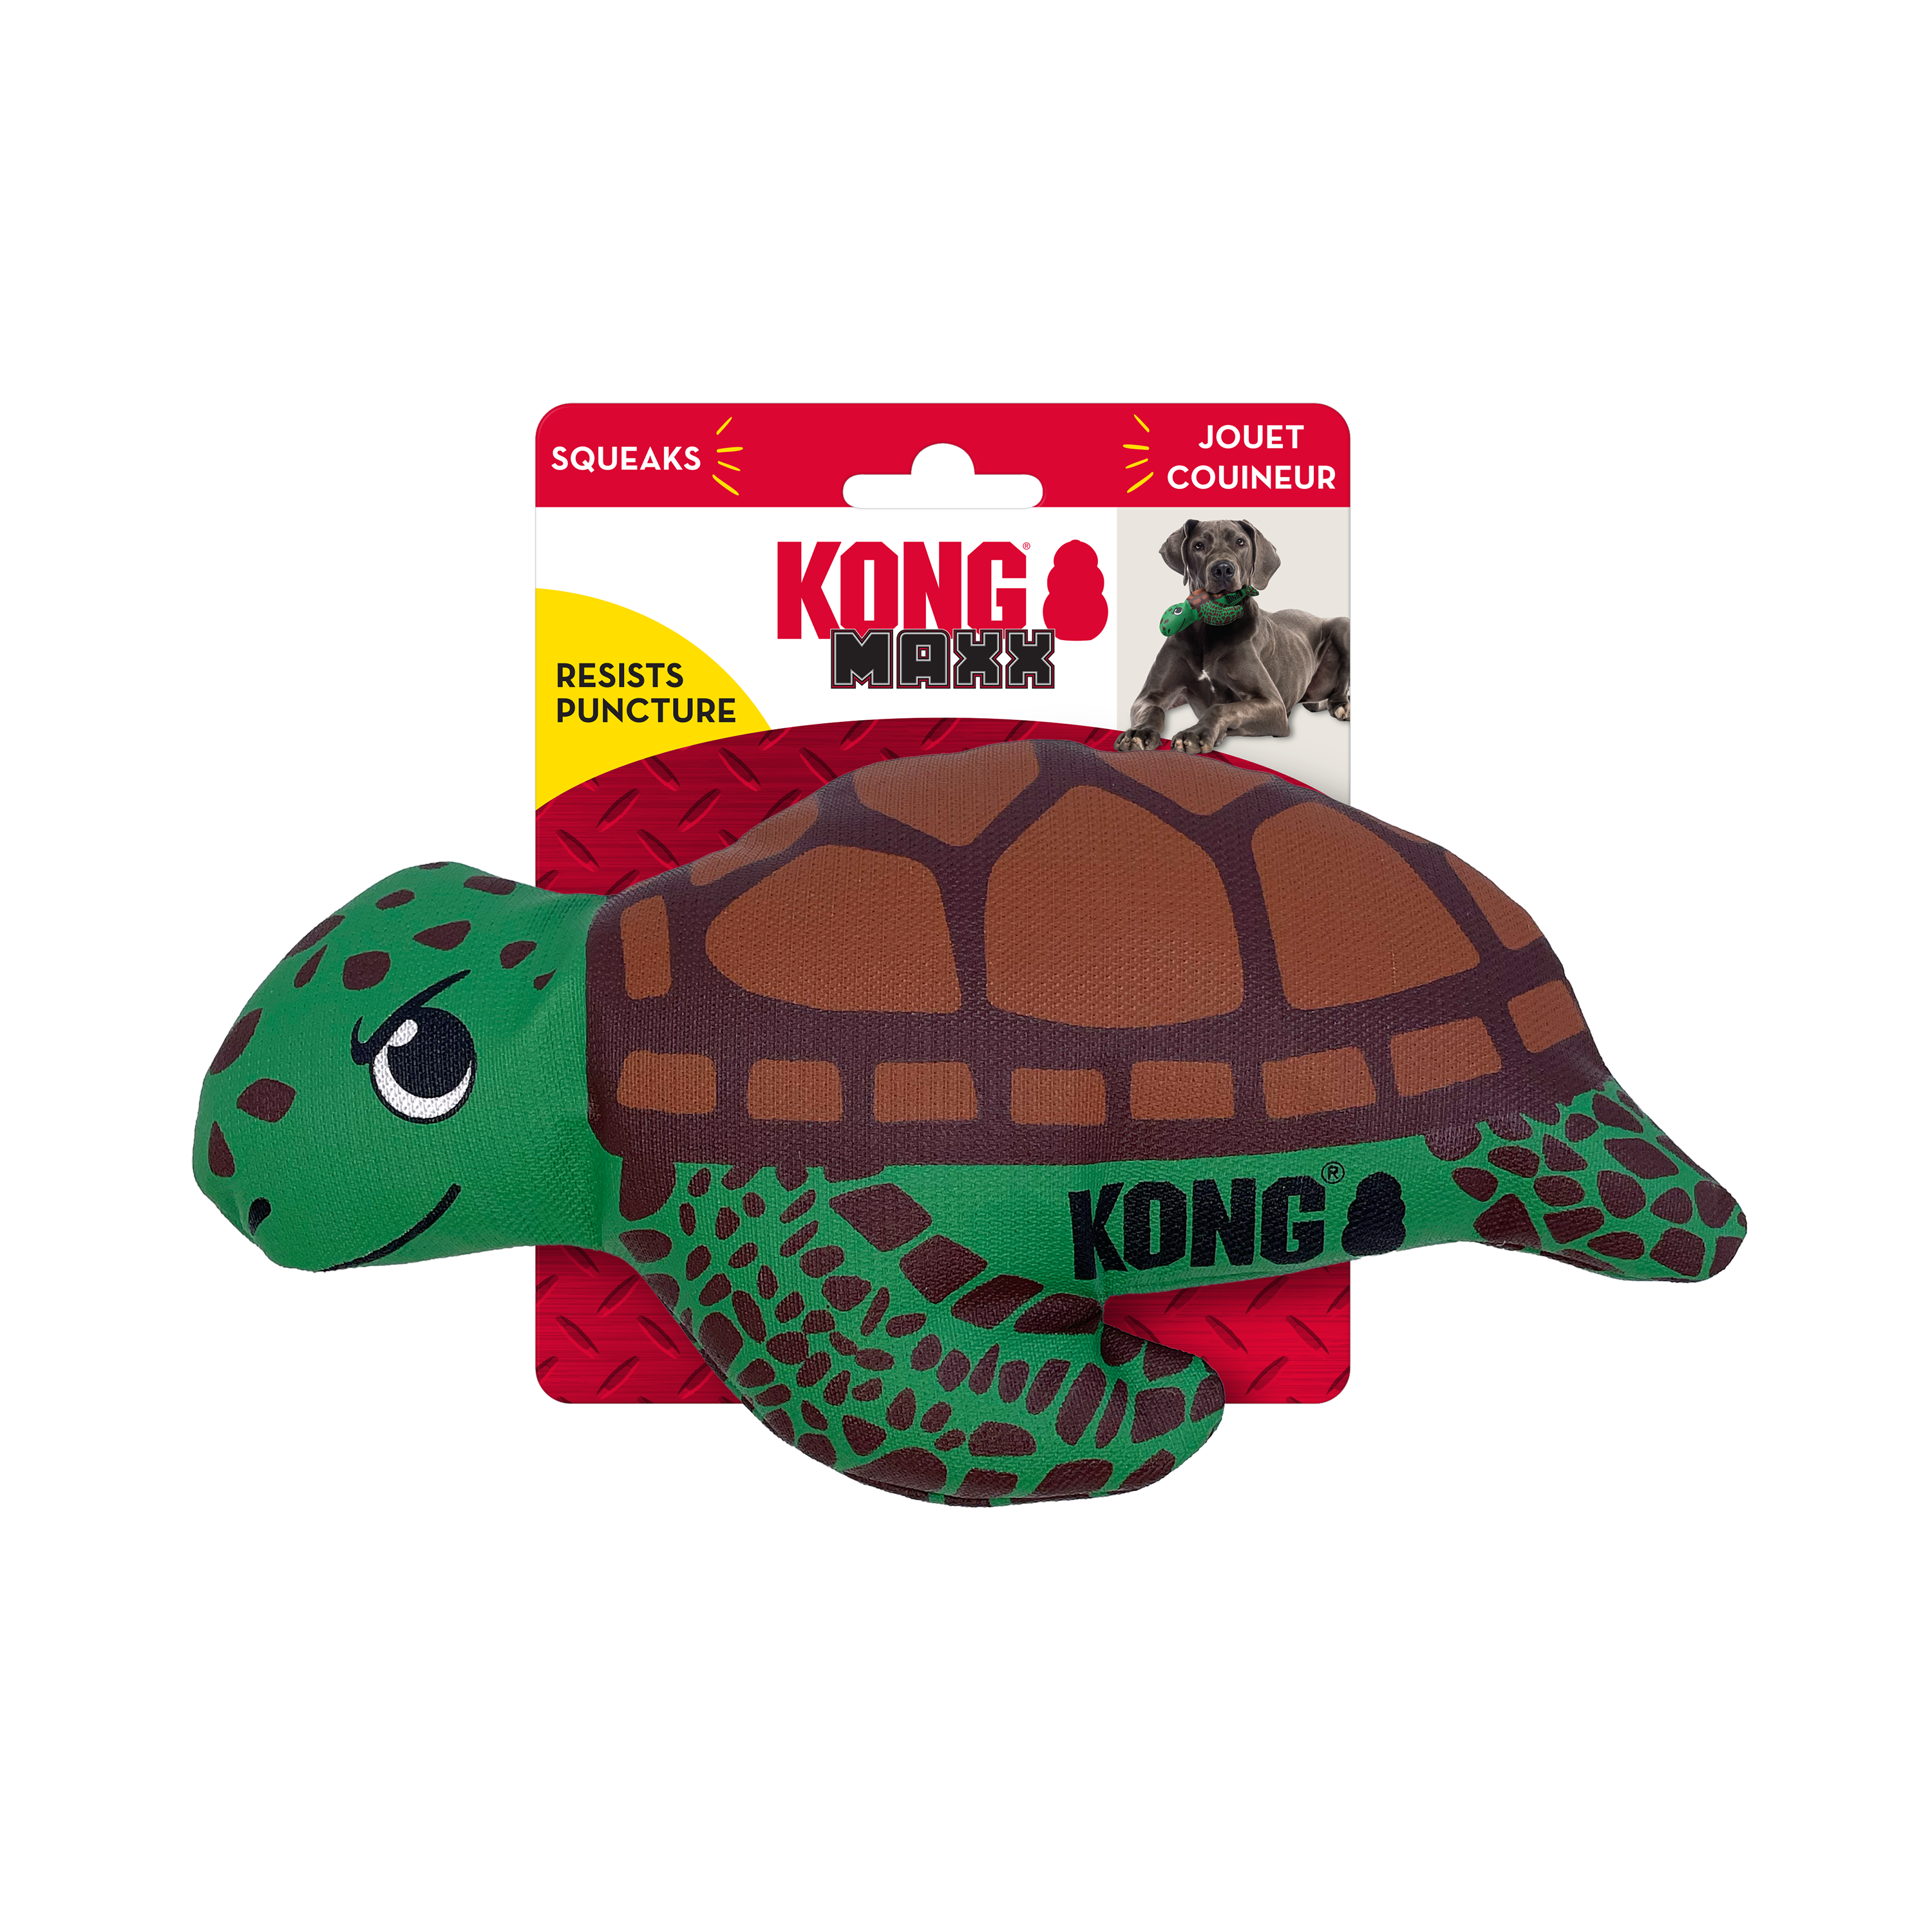 Maxx Turtle onpack product image